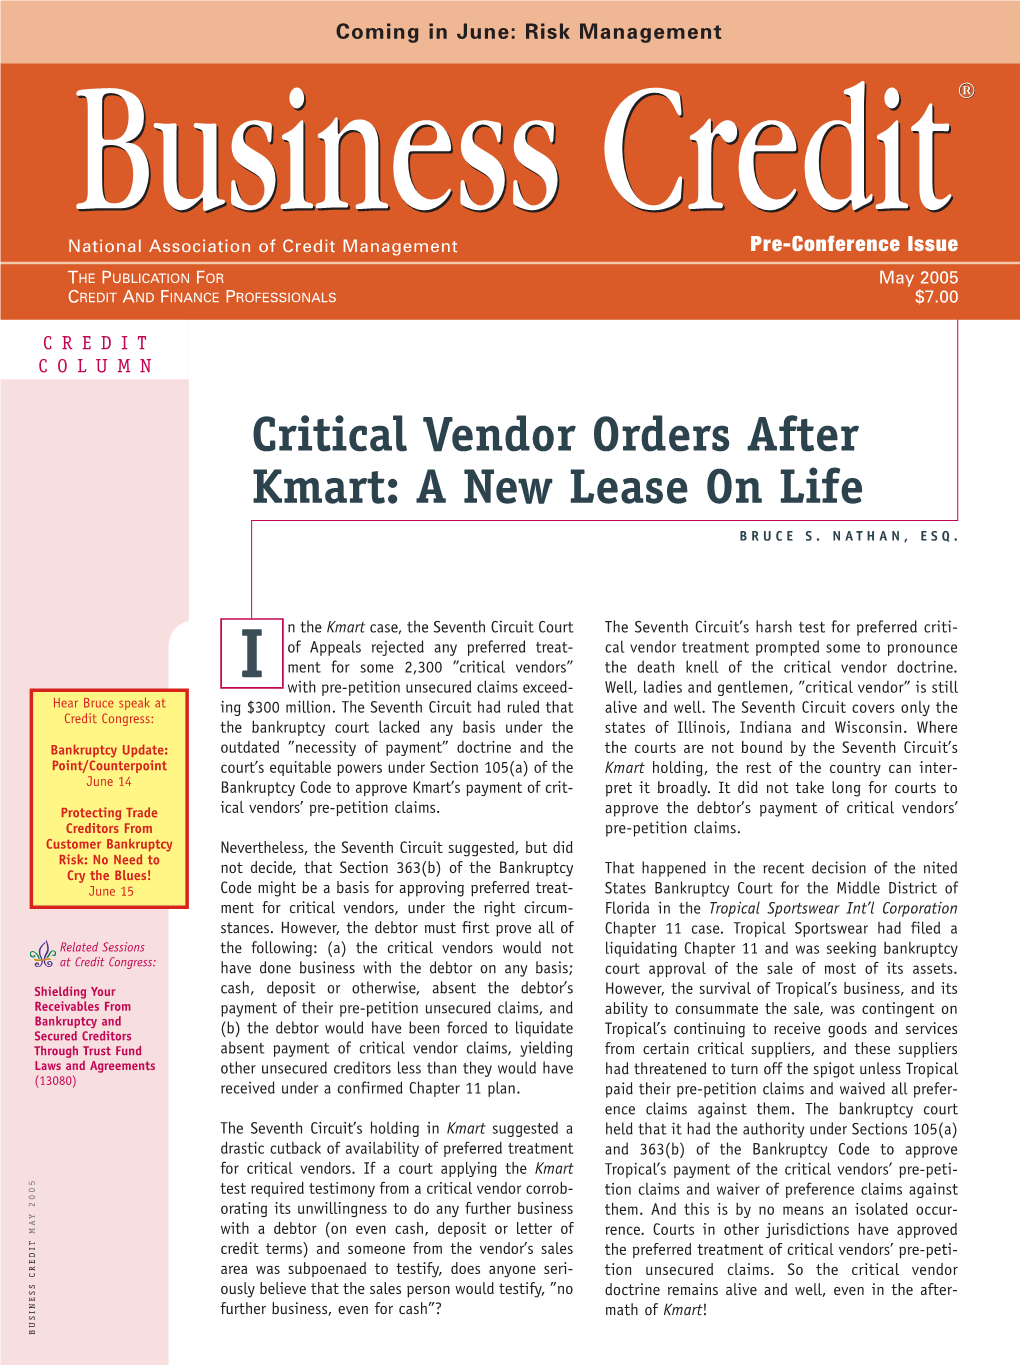 Critical Vendor Orders After Kmart